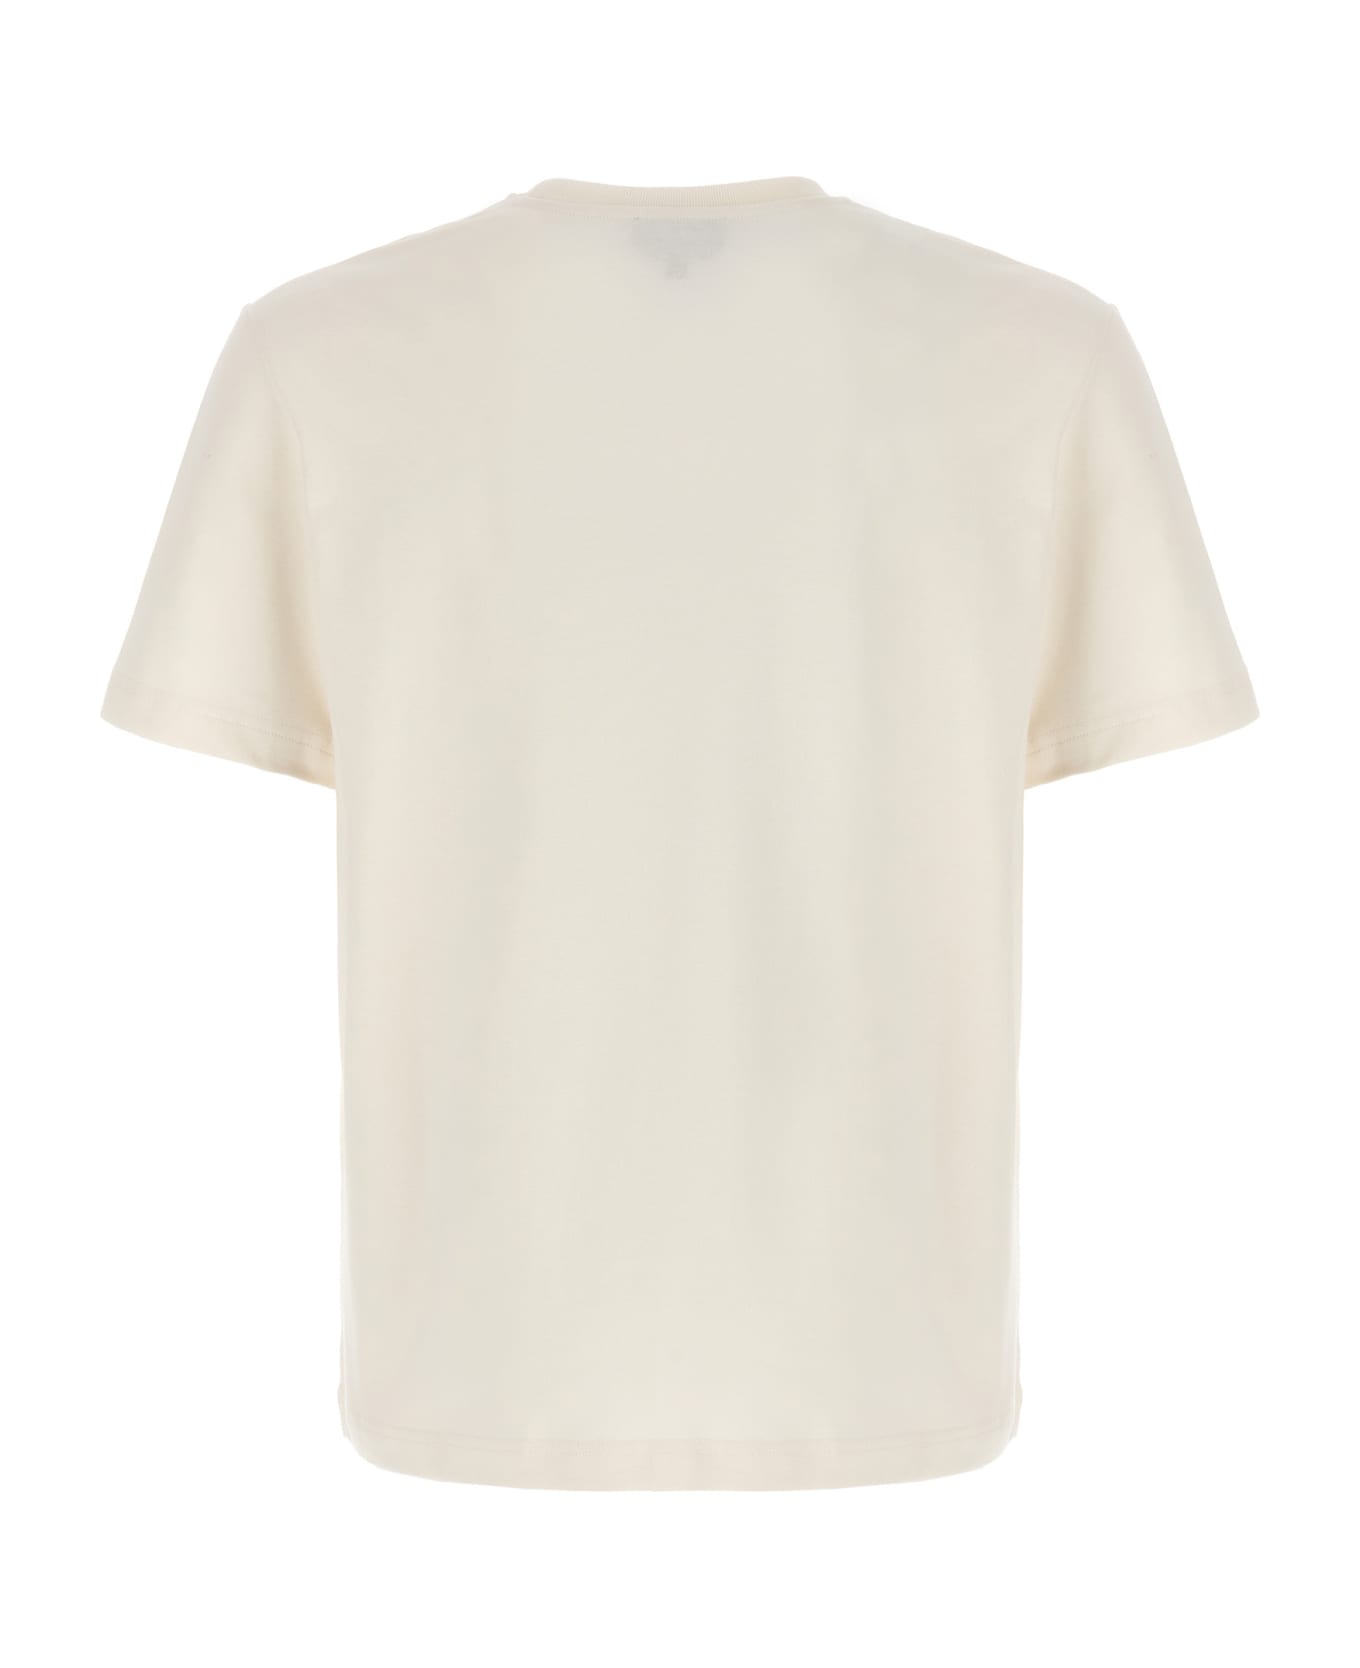 A.P.C. Isaac Cotton Crew Neck T-shirt - White